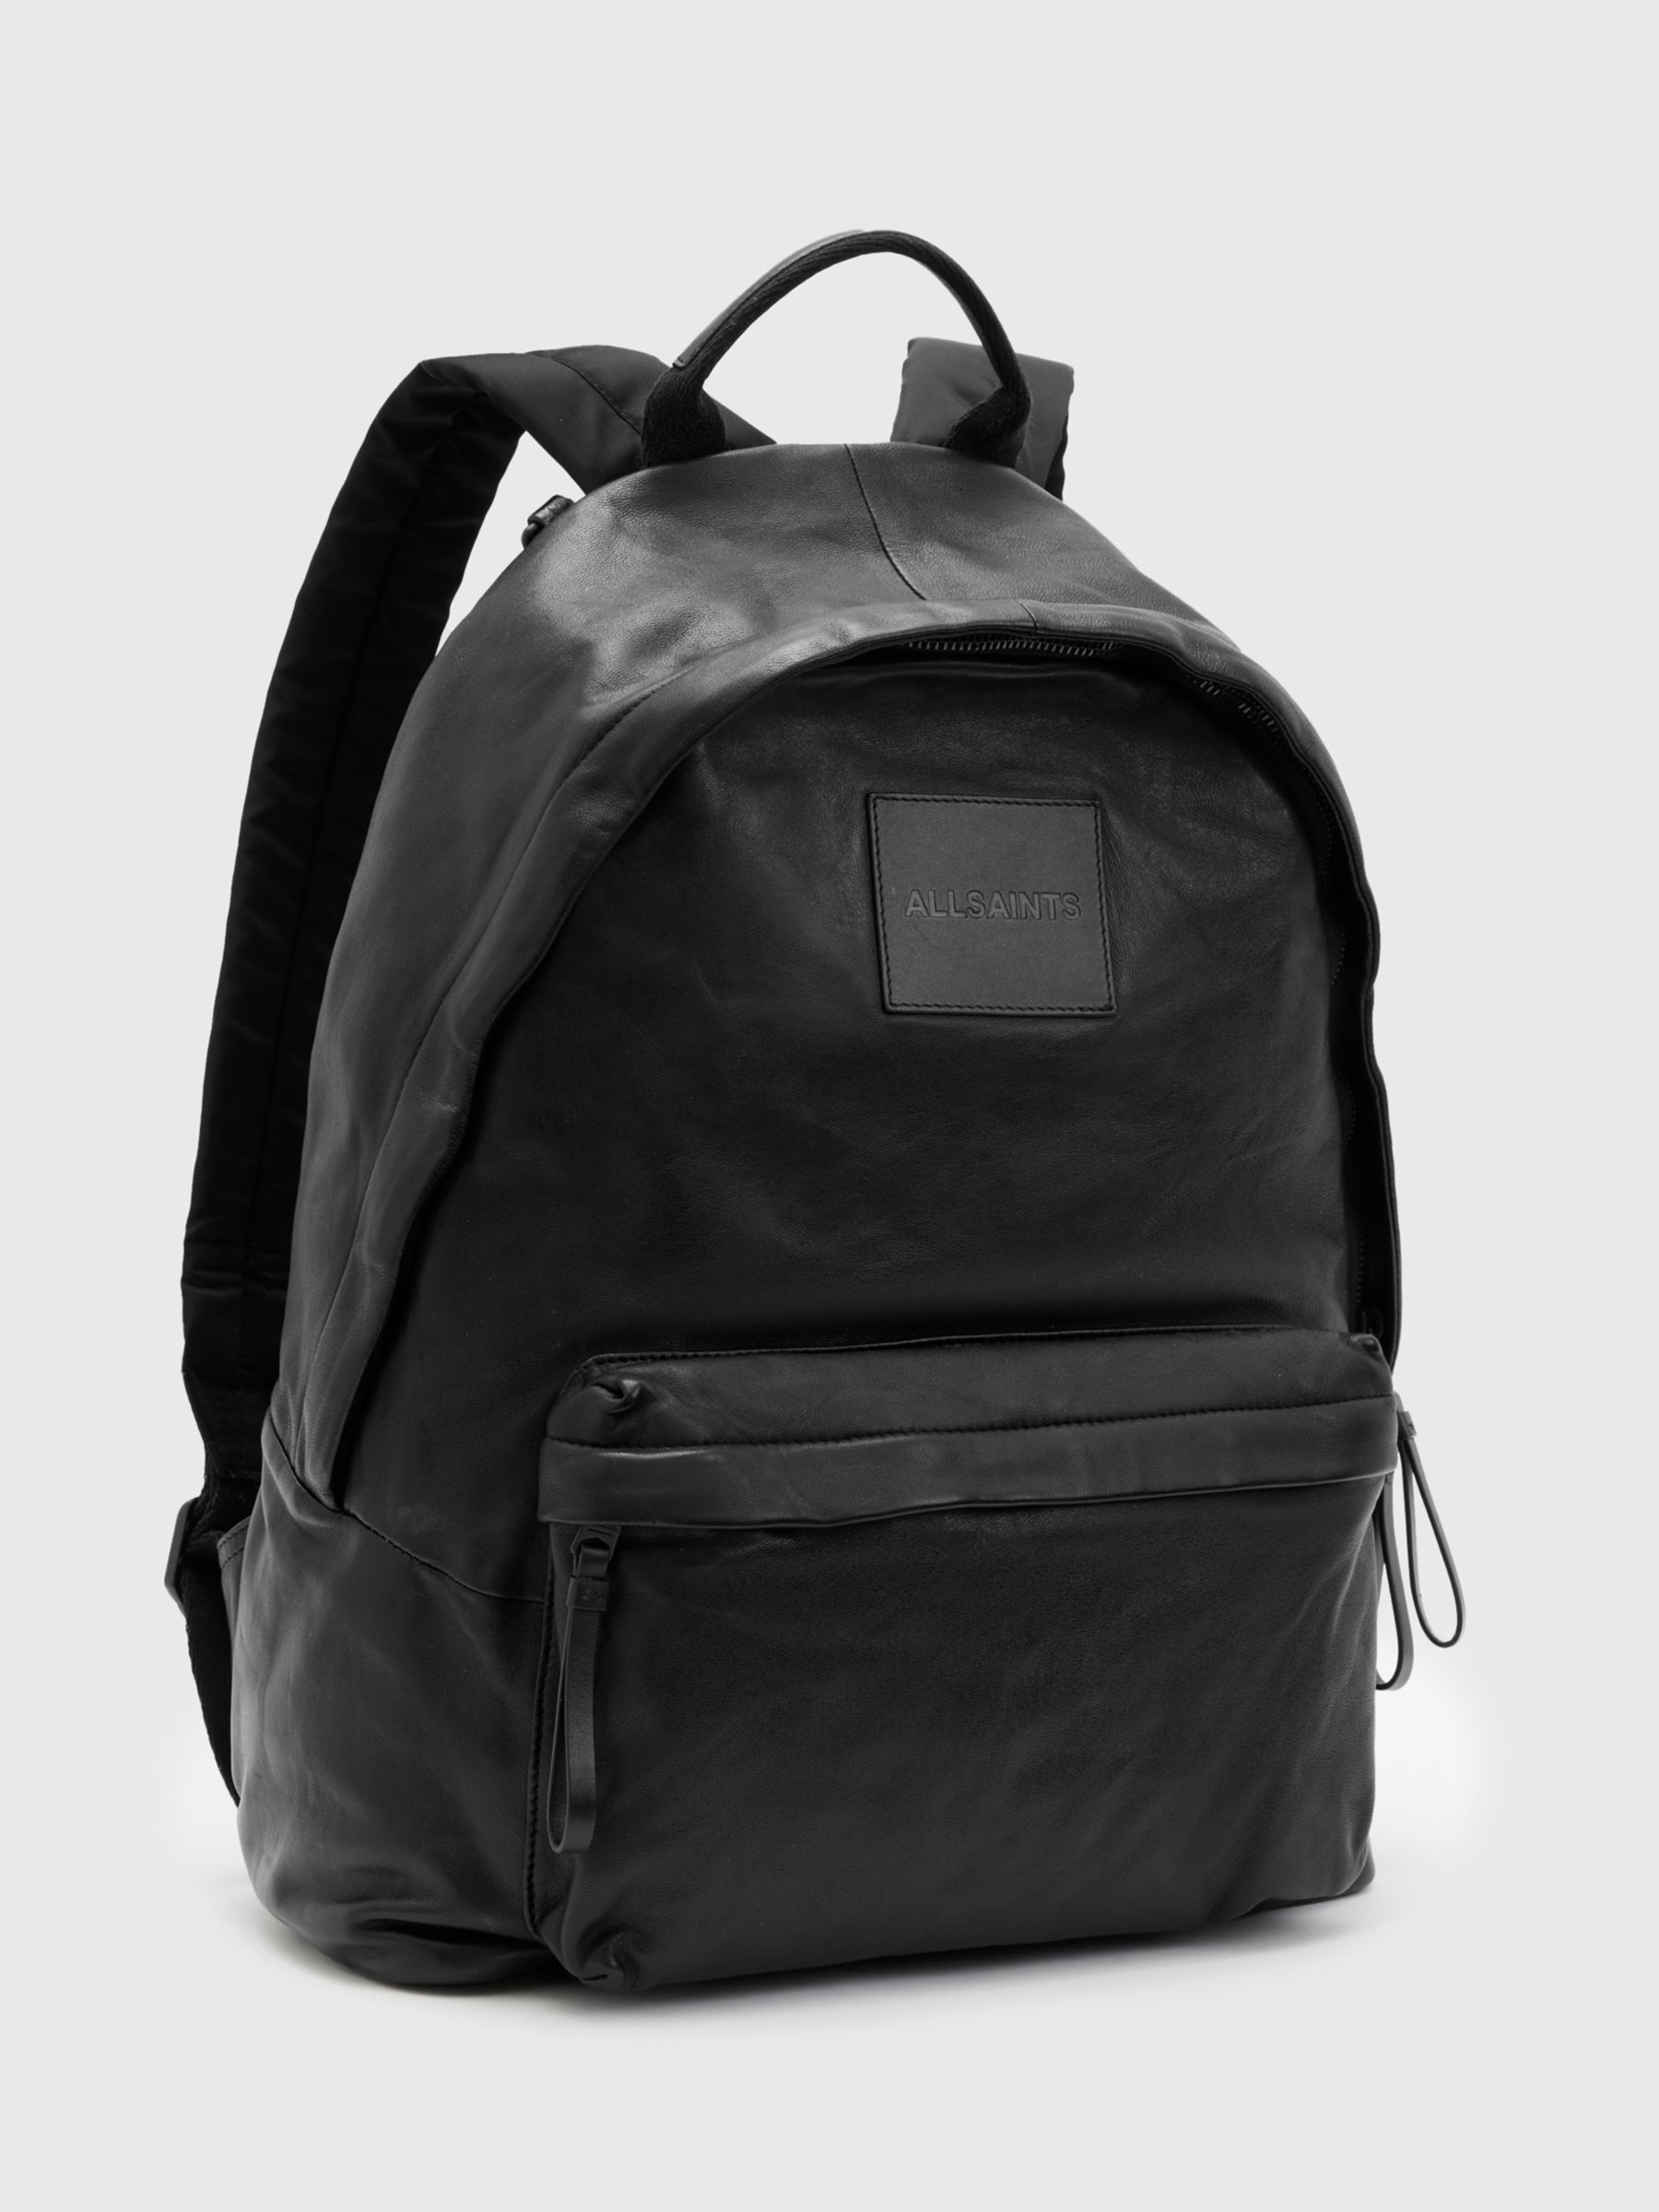 AllSaints Carabiner Leather Backpack, Black at John Lewis & Partners